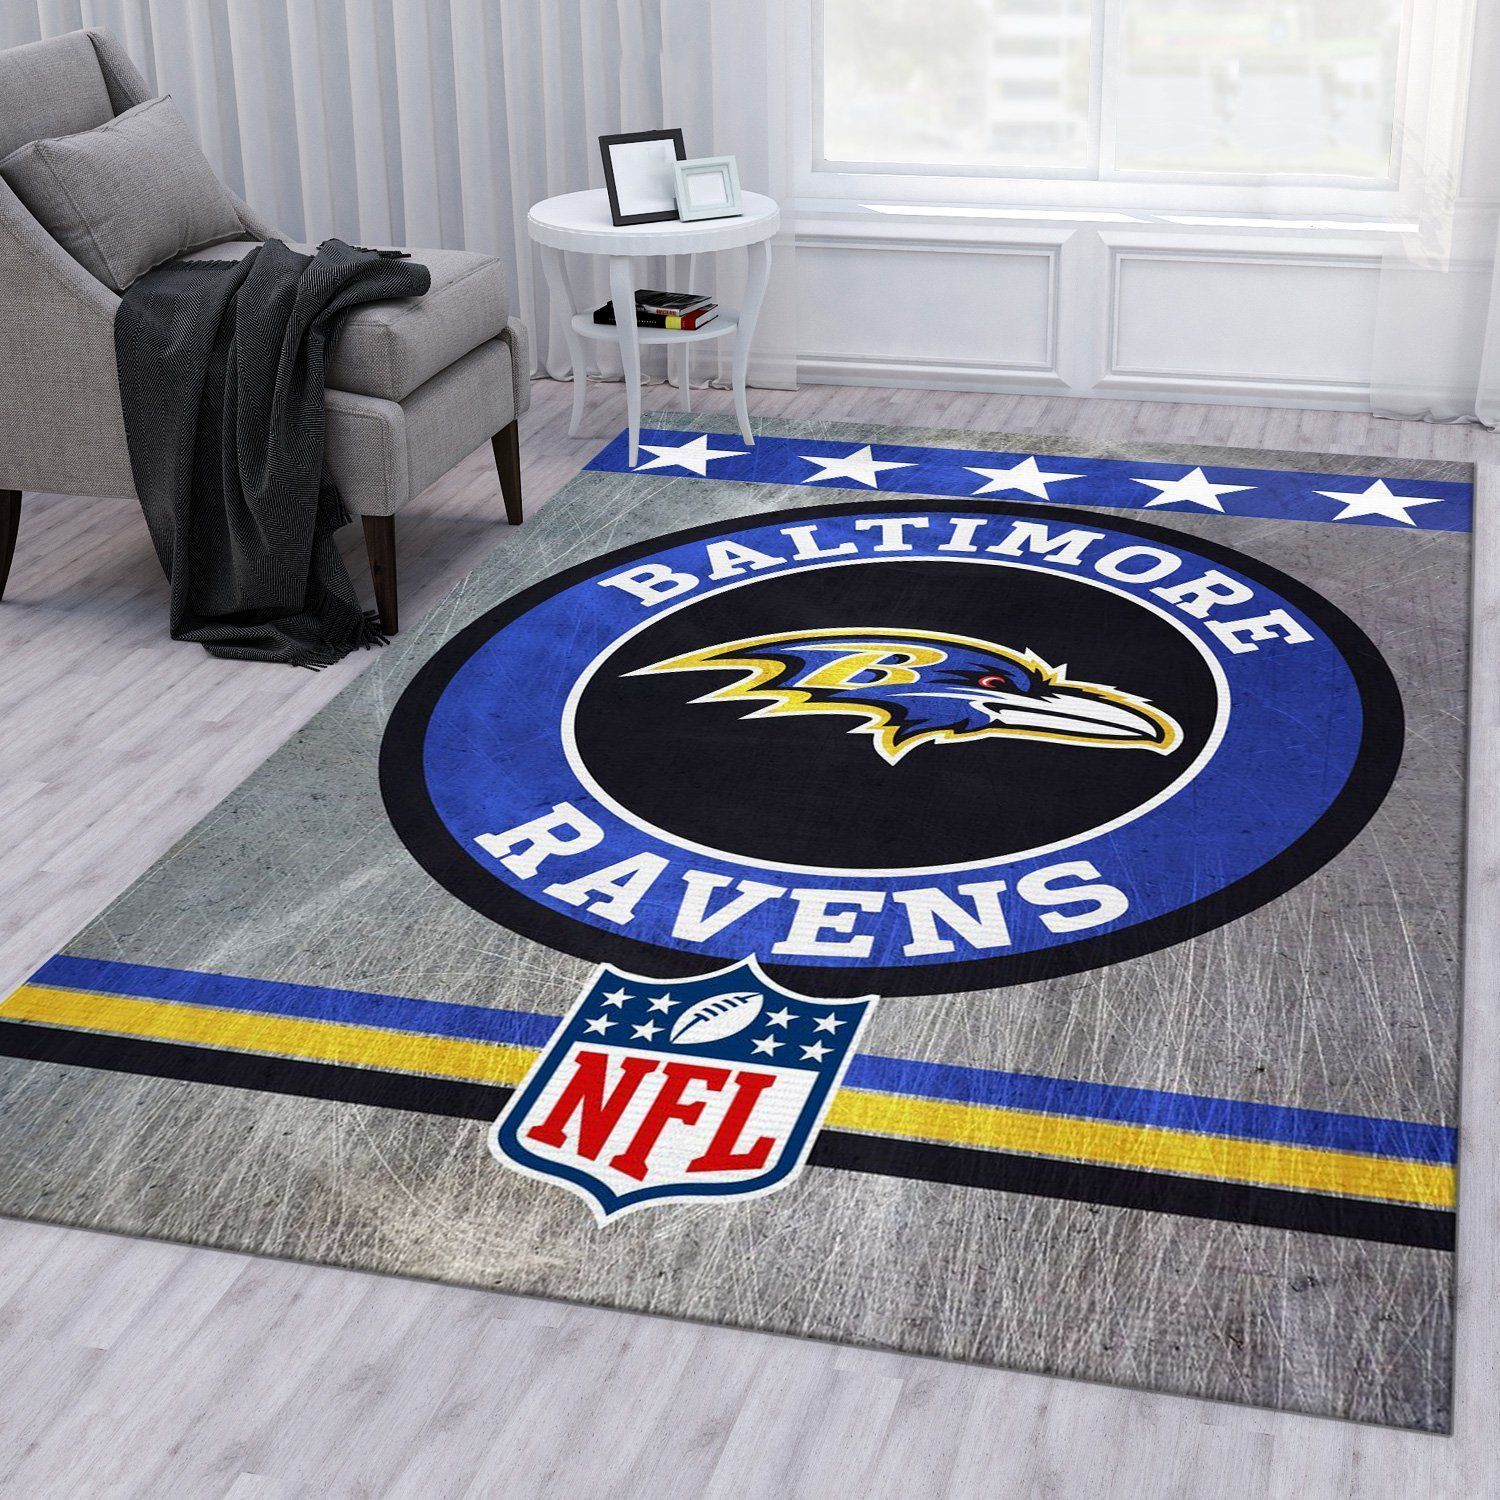 Baltimore Ravens Nfl Area Rug Bedroom Rug Christmas Gift US Decor - Indoor Outdoor Rugs